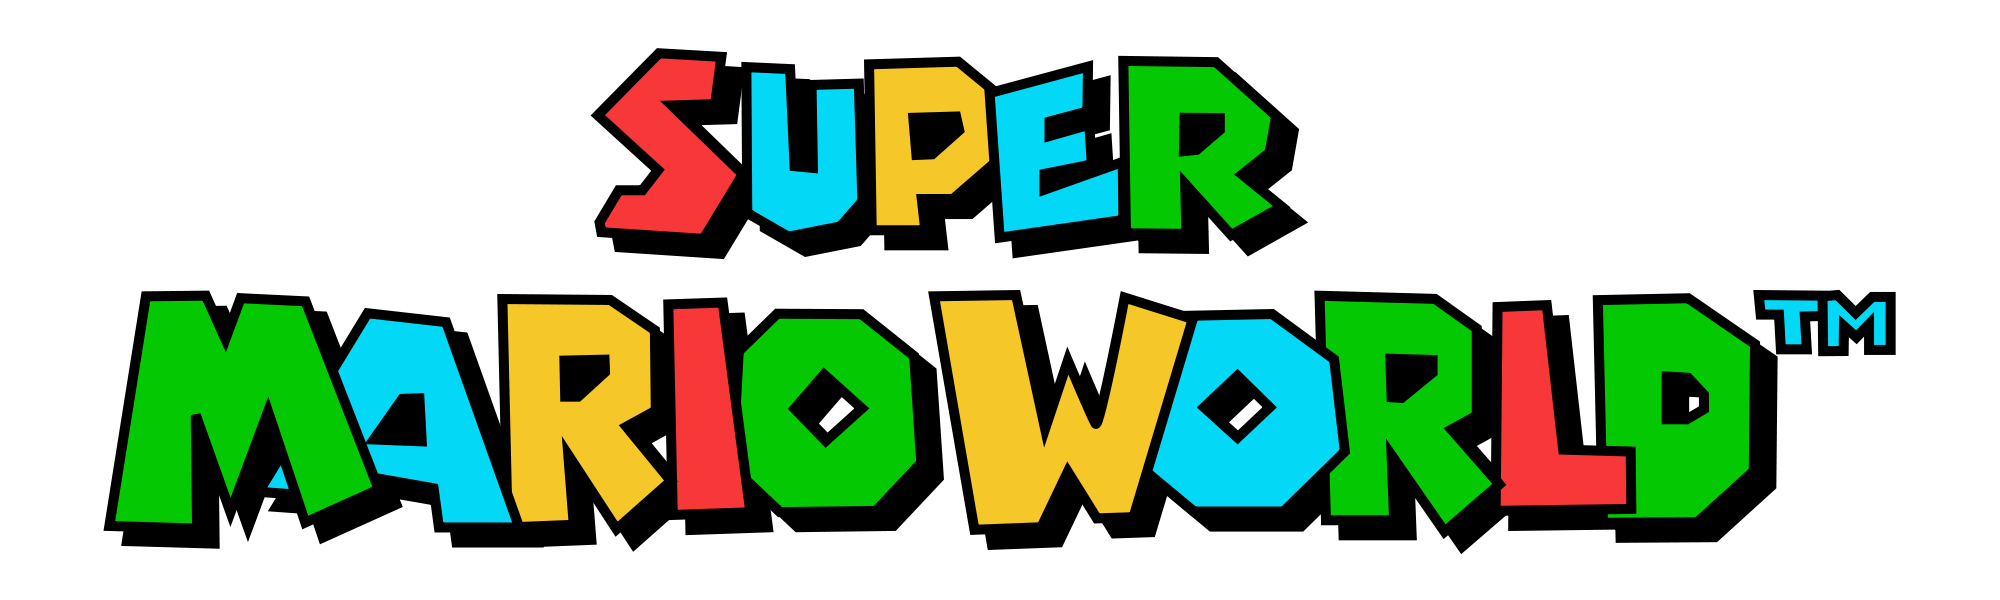 Super mario world. Super Mario логотип. Mario надпись. Super Mario надпись. Надпись в стиле супер Марио.